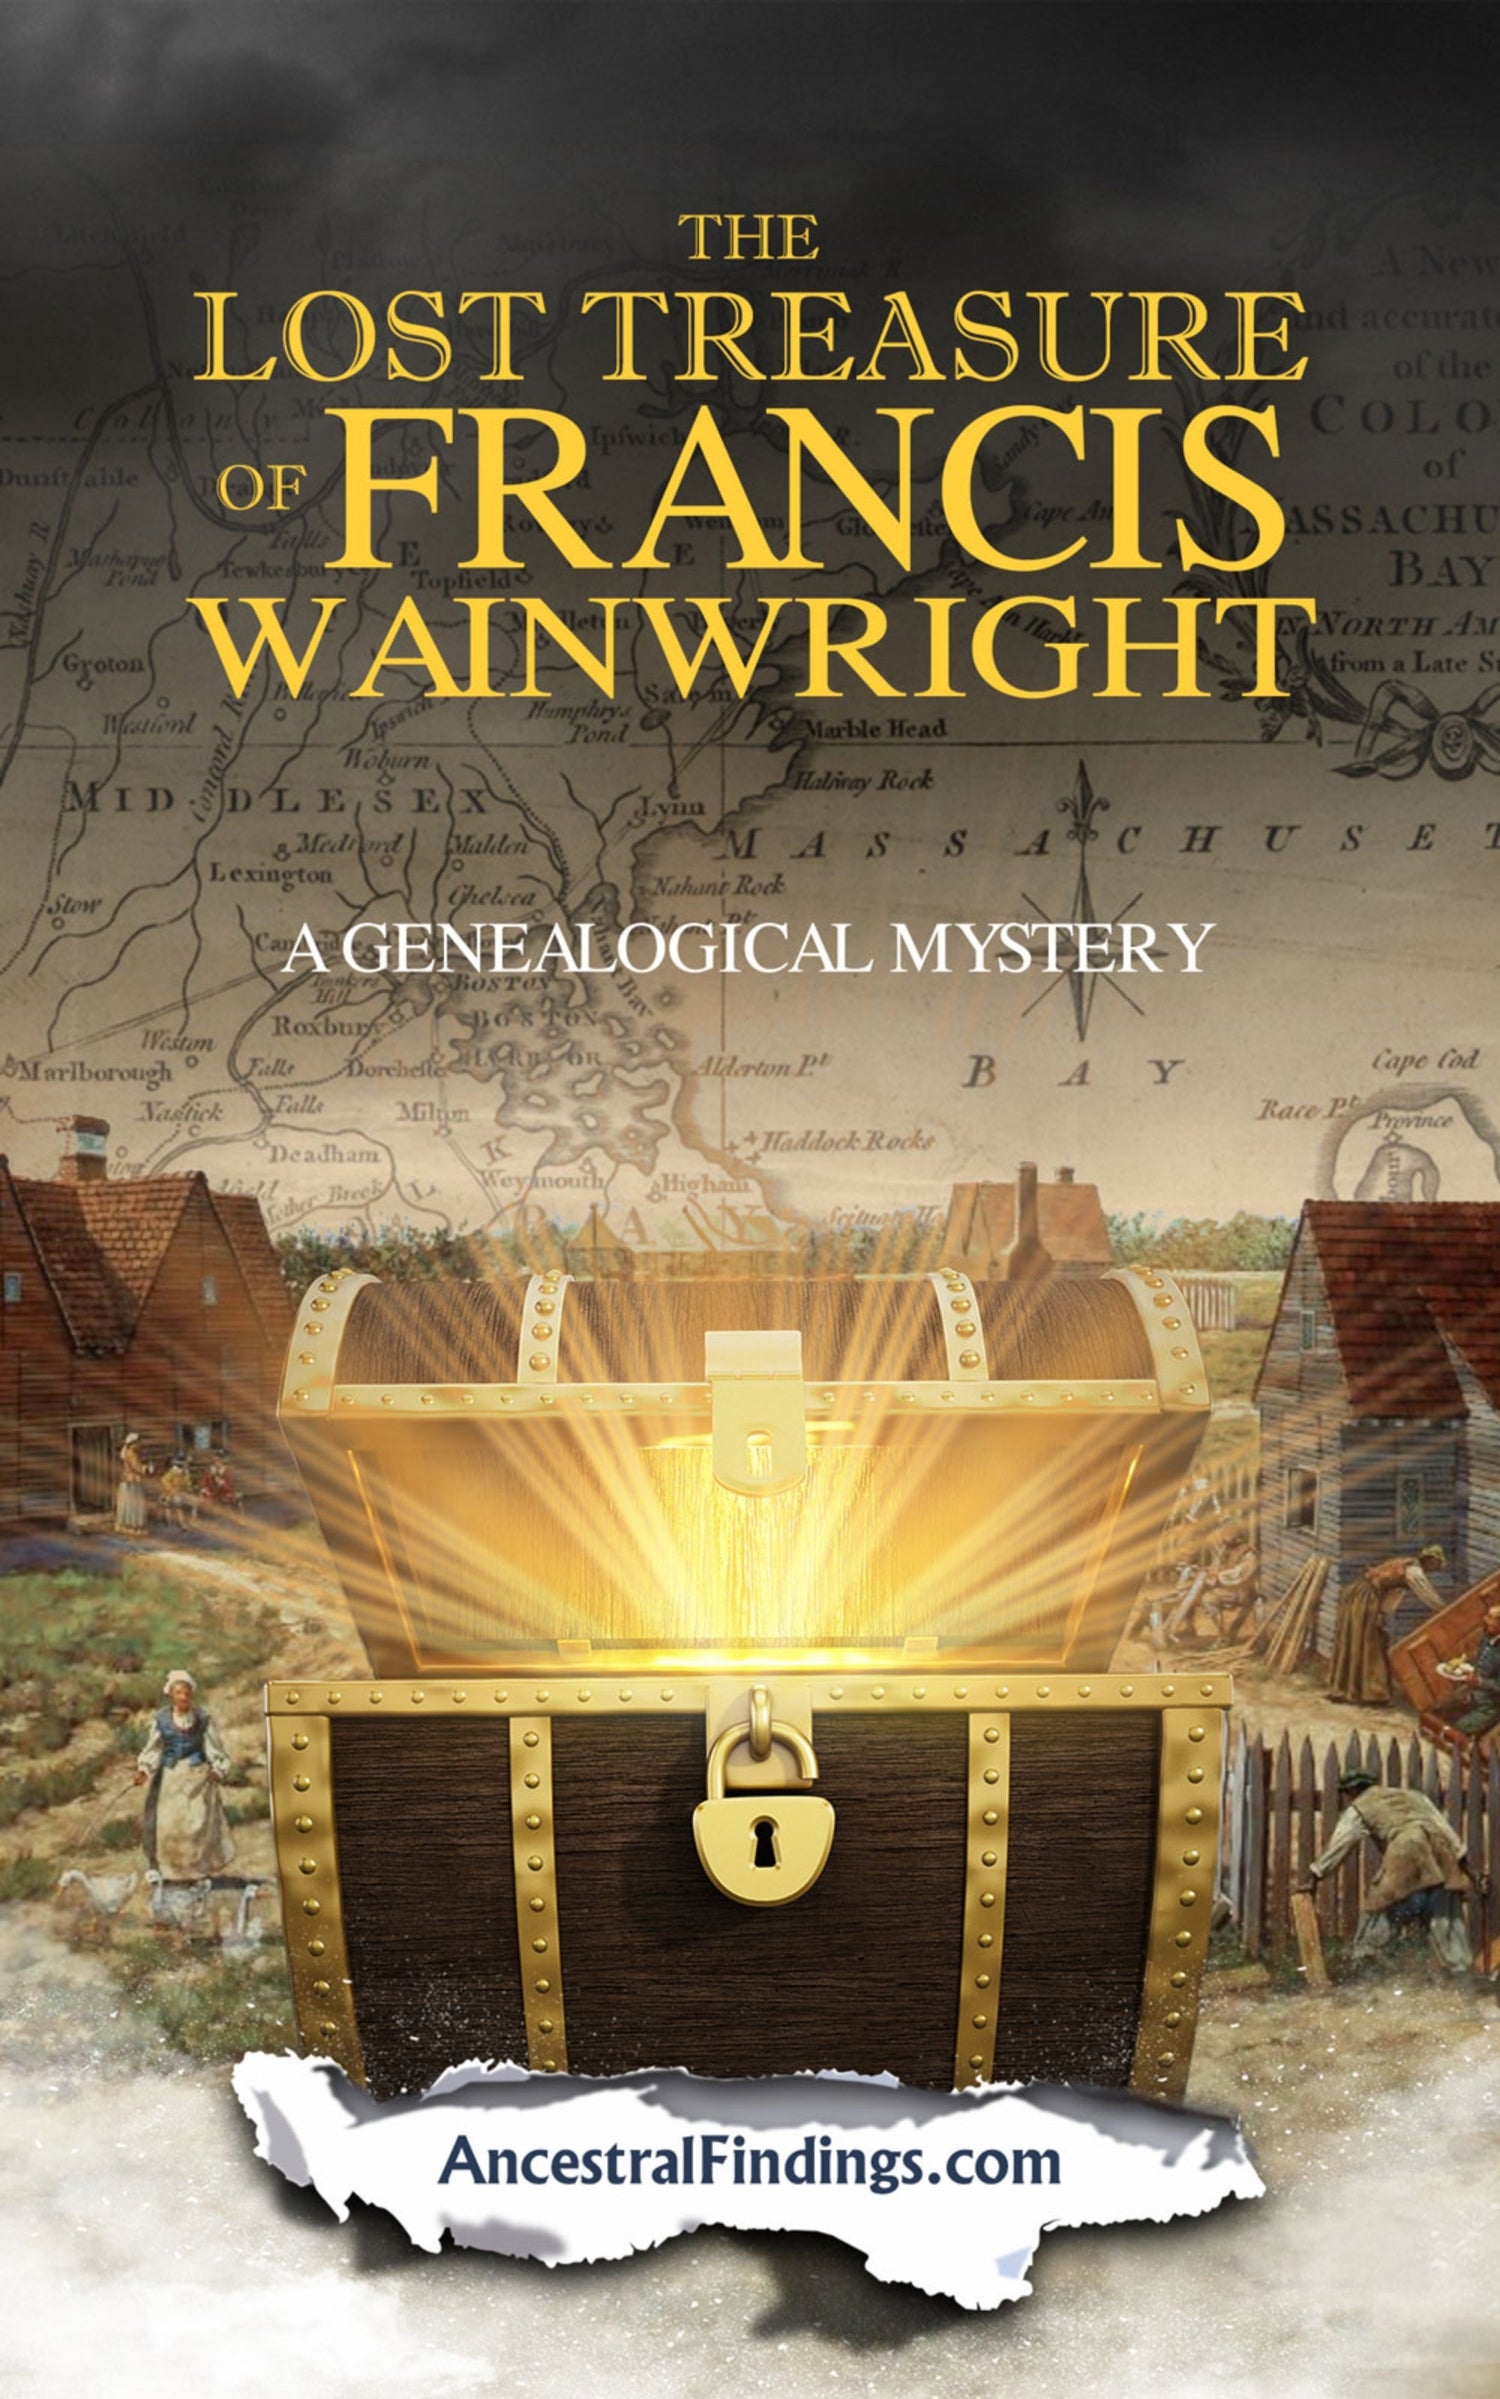 The Lost Treasure of Francis Wainwright